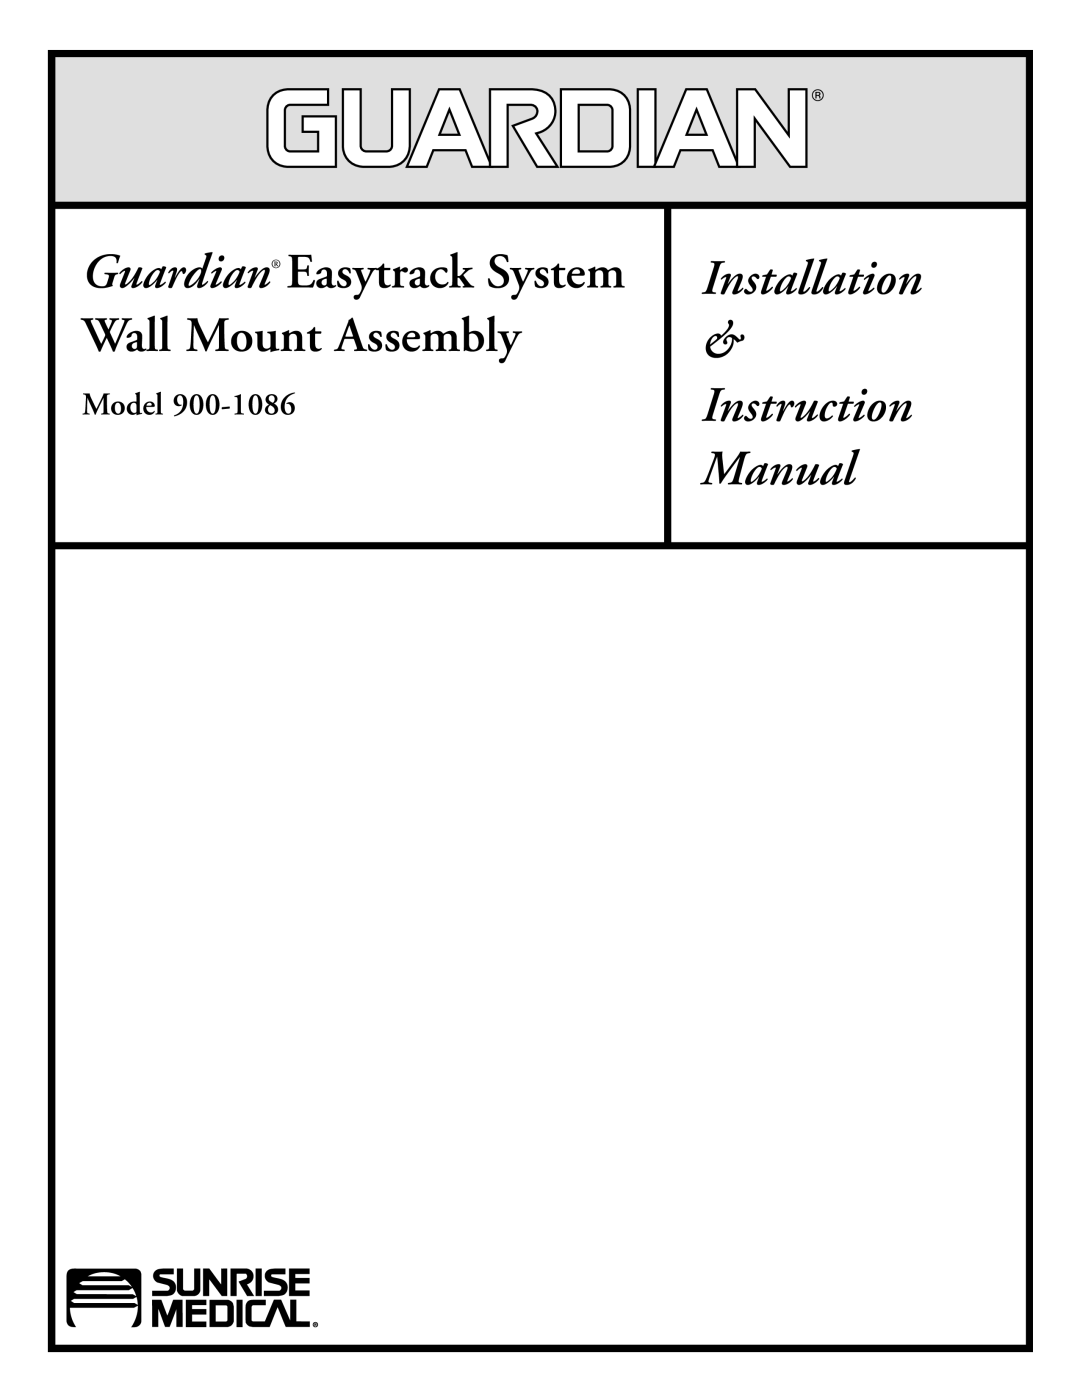 Sunrise Medical 900-1086 instruction manual Installation, Guardian Easytrack System Wall Mount Assembly, Model 